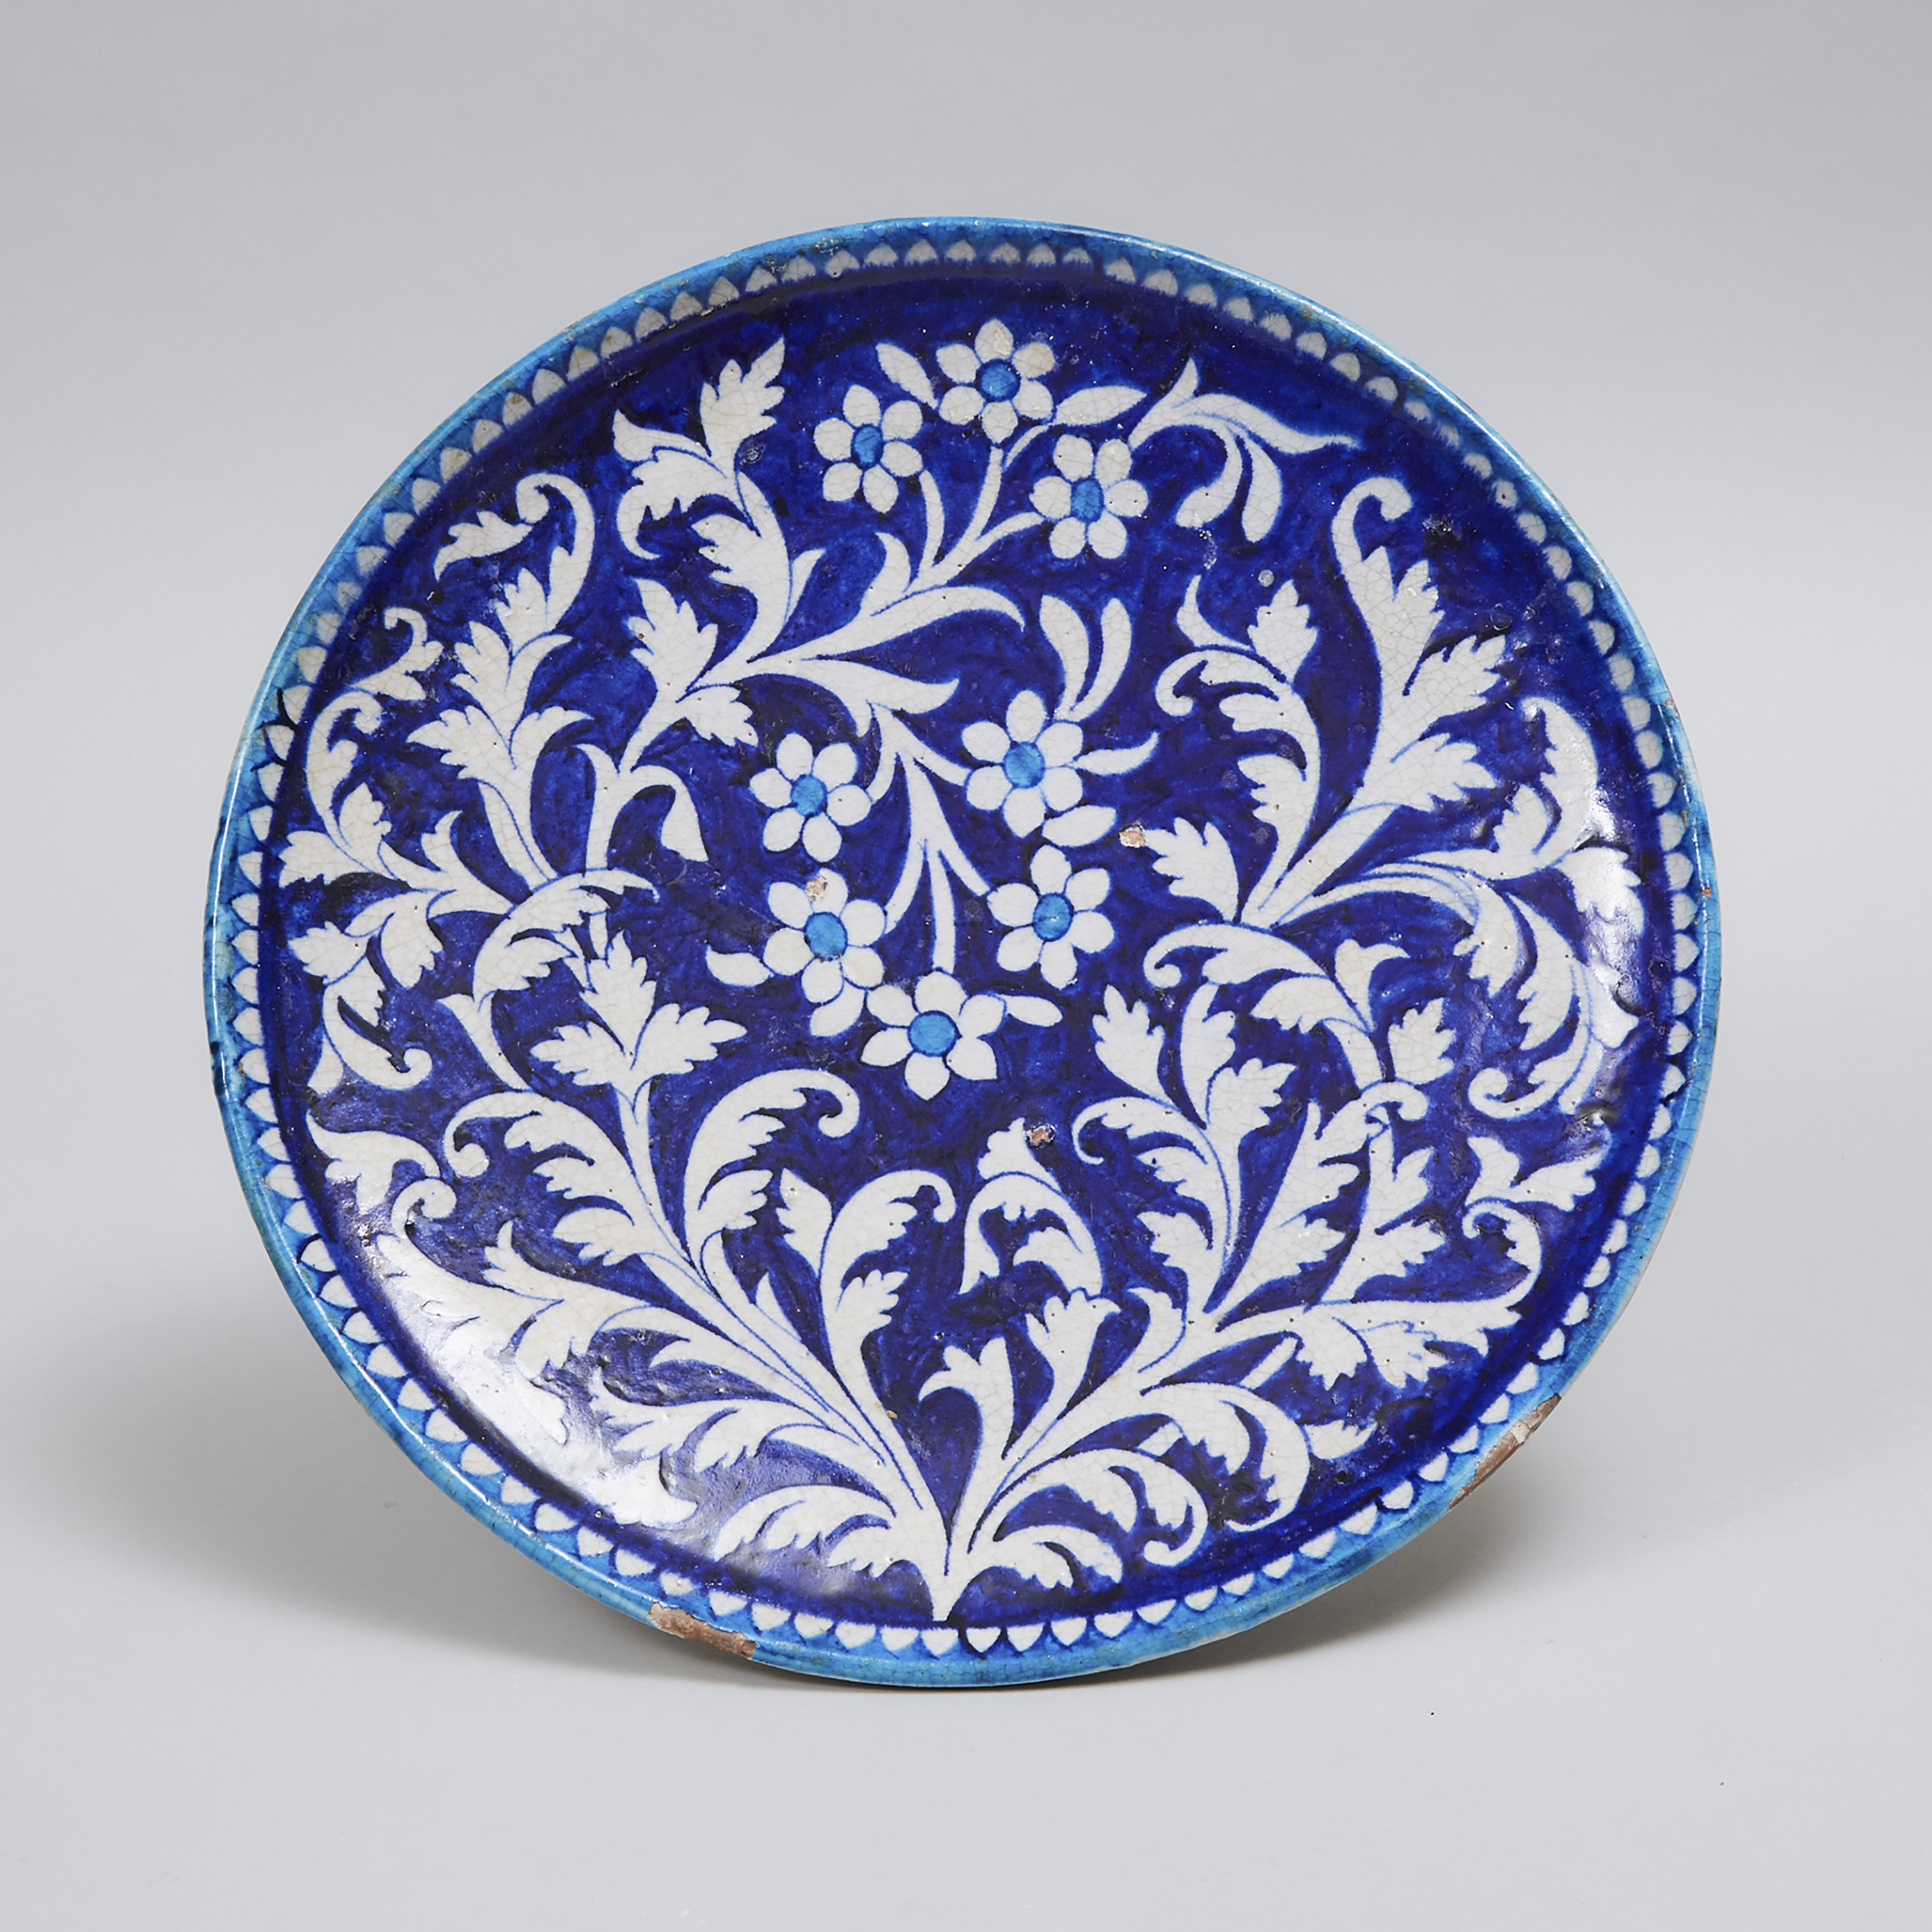 Multan Cobalt Blue and Turquoise Pottery Dish, Islamic Pakistan, 18th/19th century